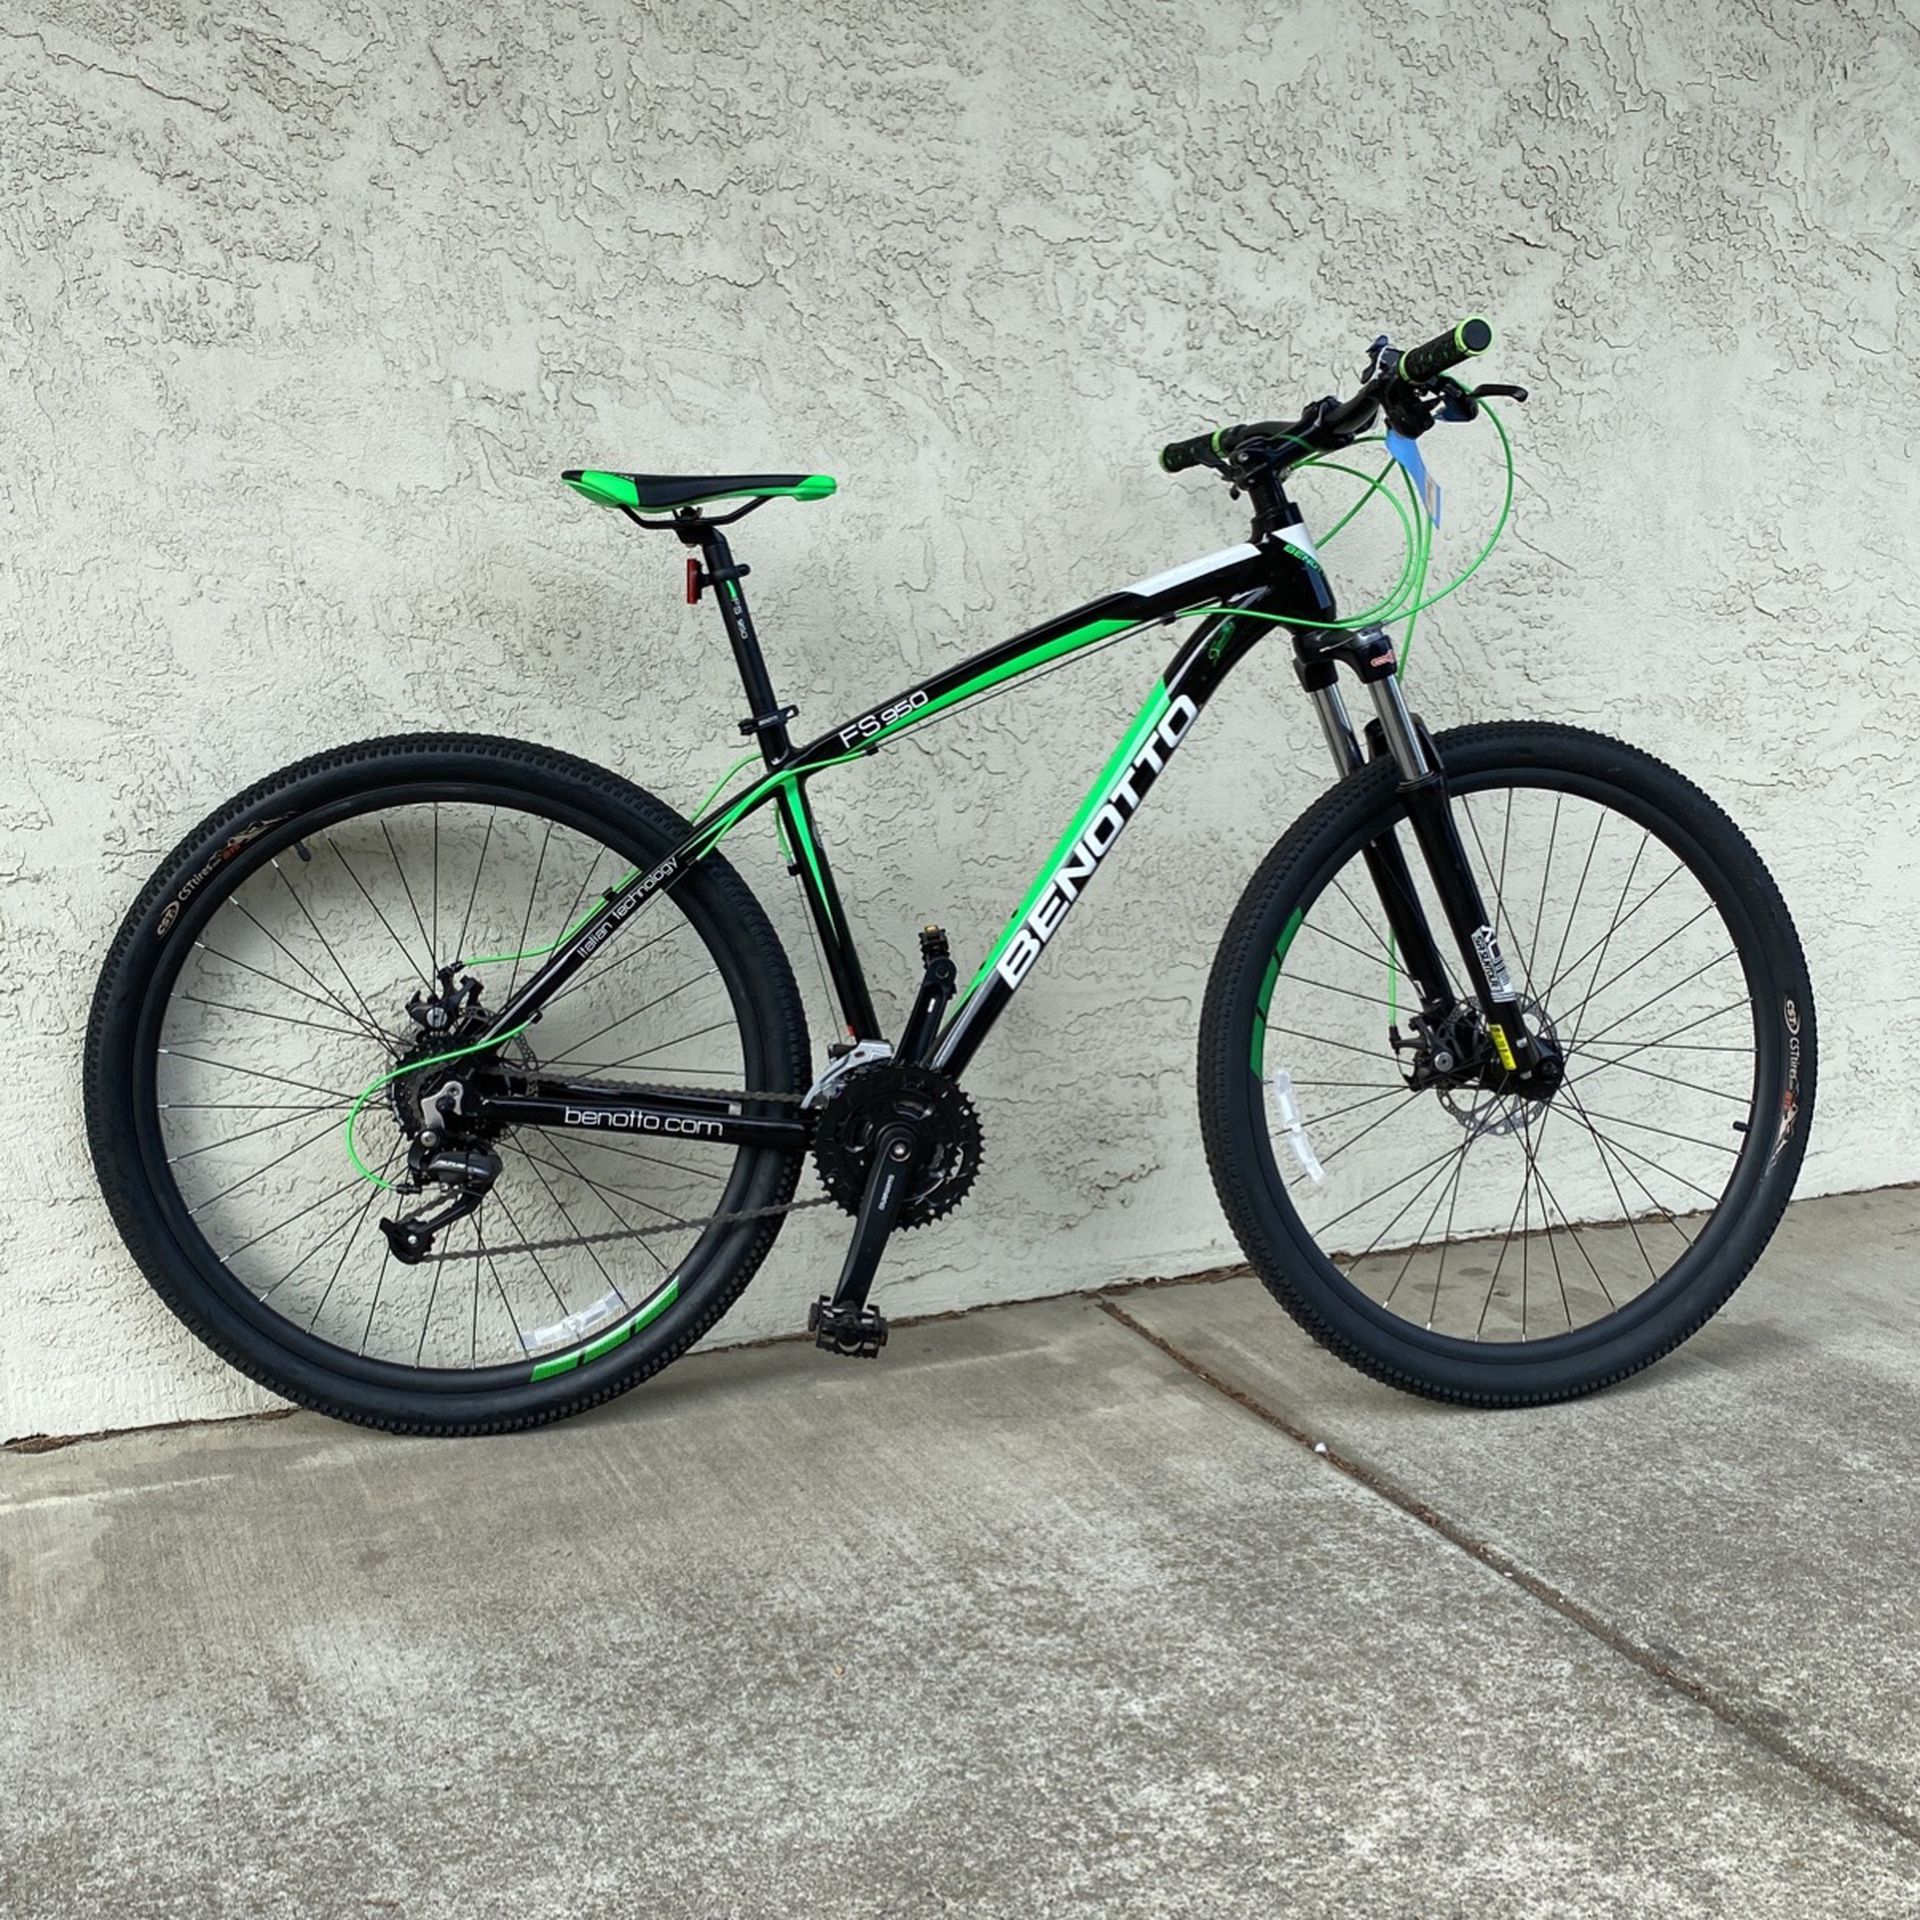 New Benotto 29er Mountain Bike Hardtail